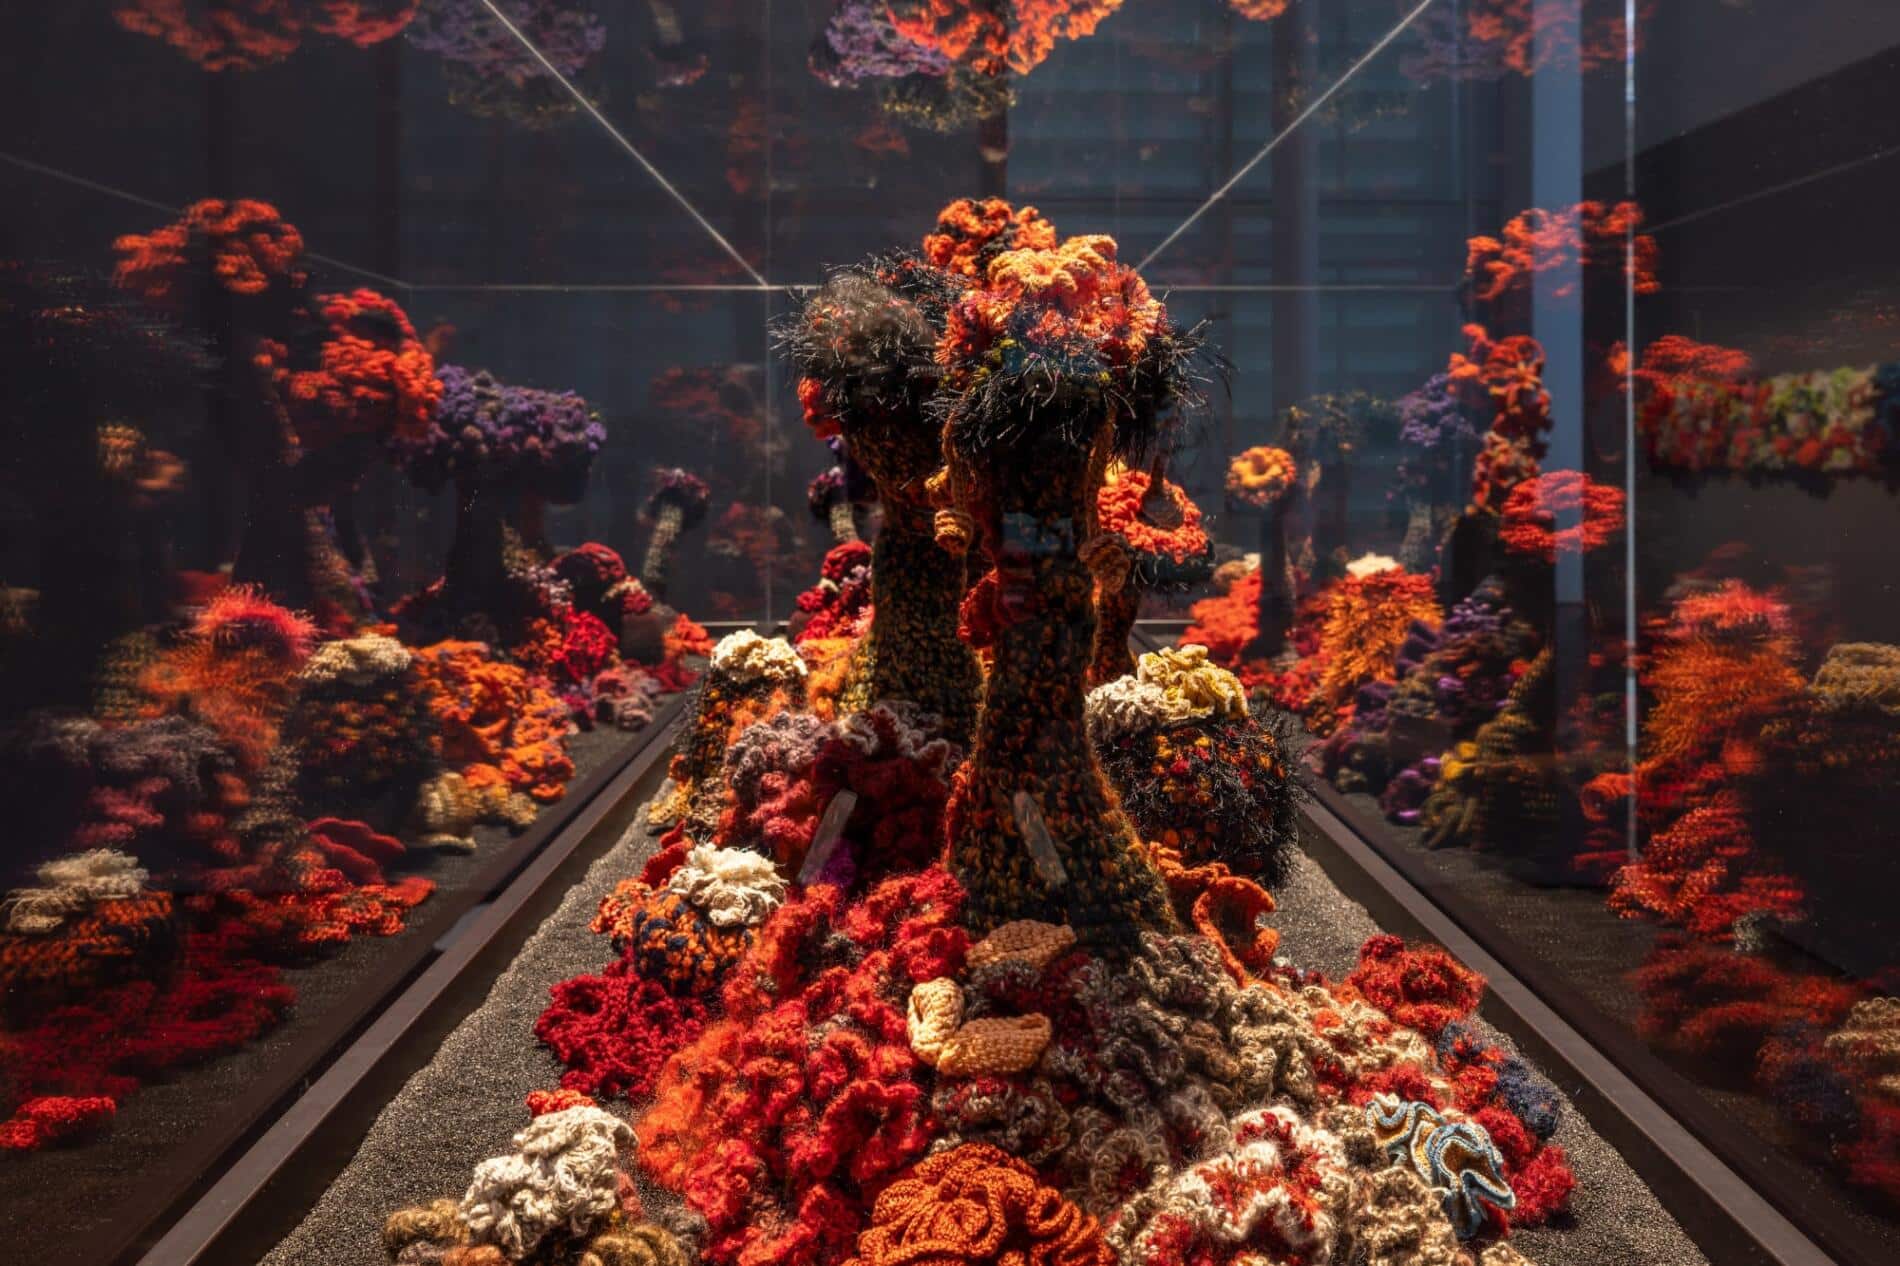 crochet coral reef escultura en ganchillo detalle terr